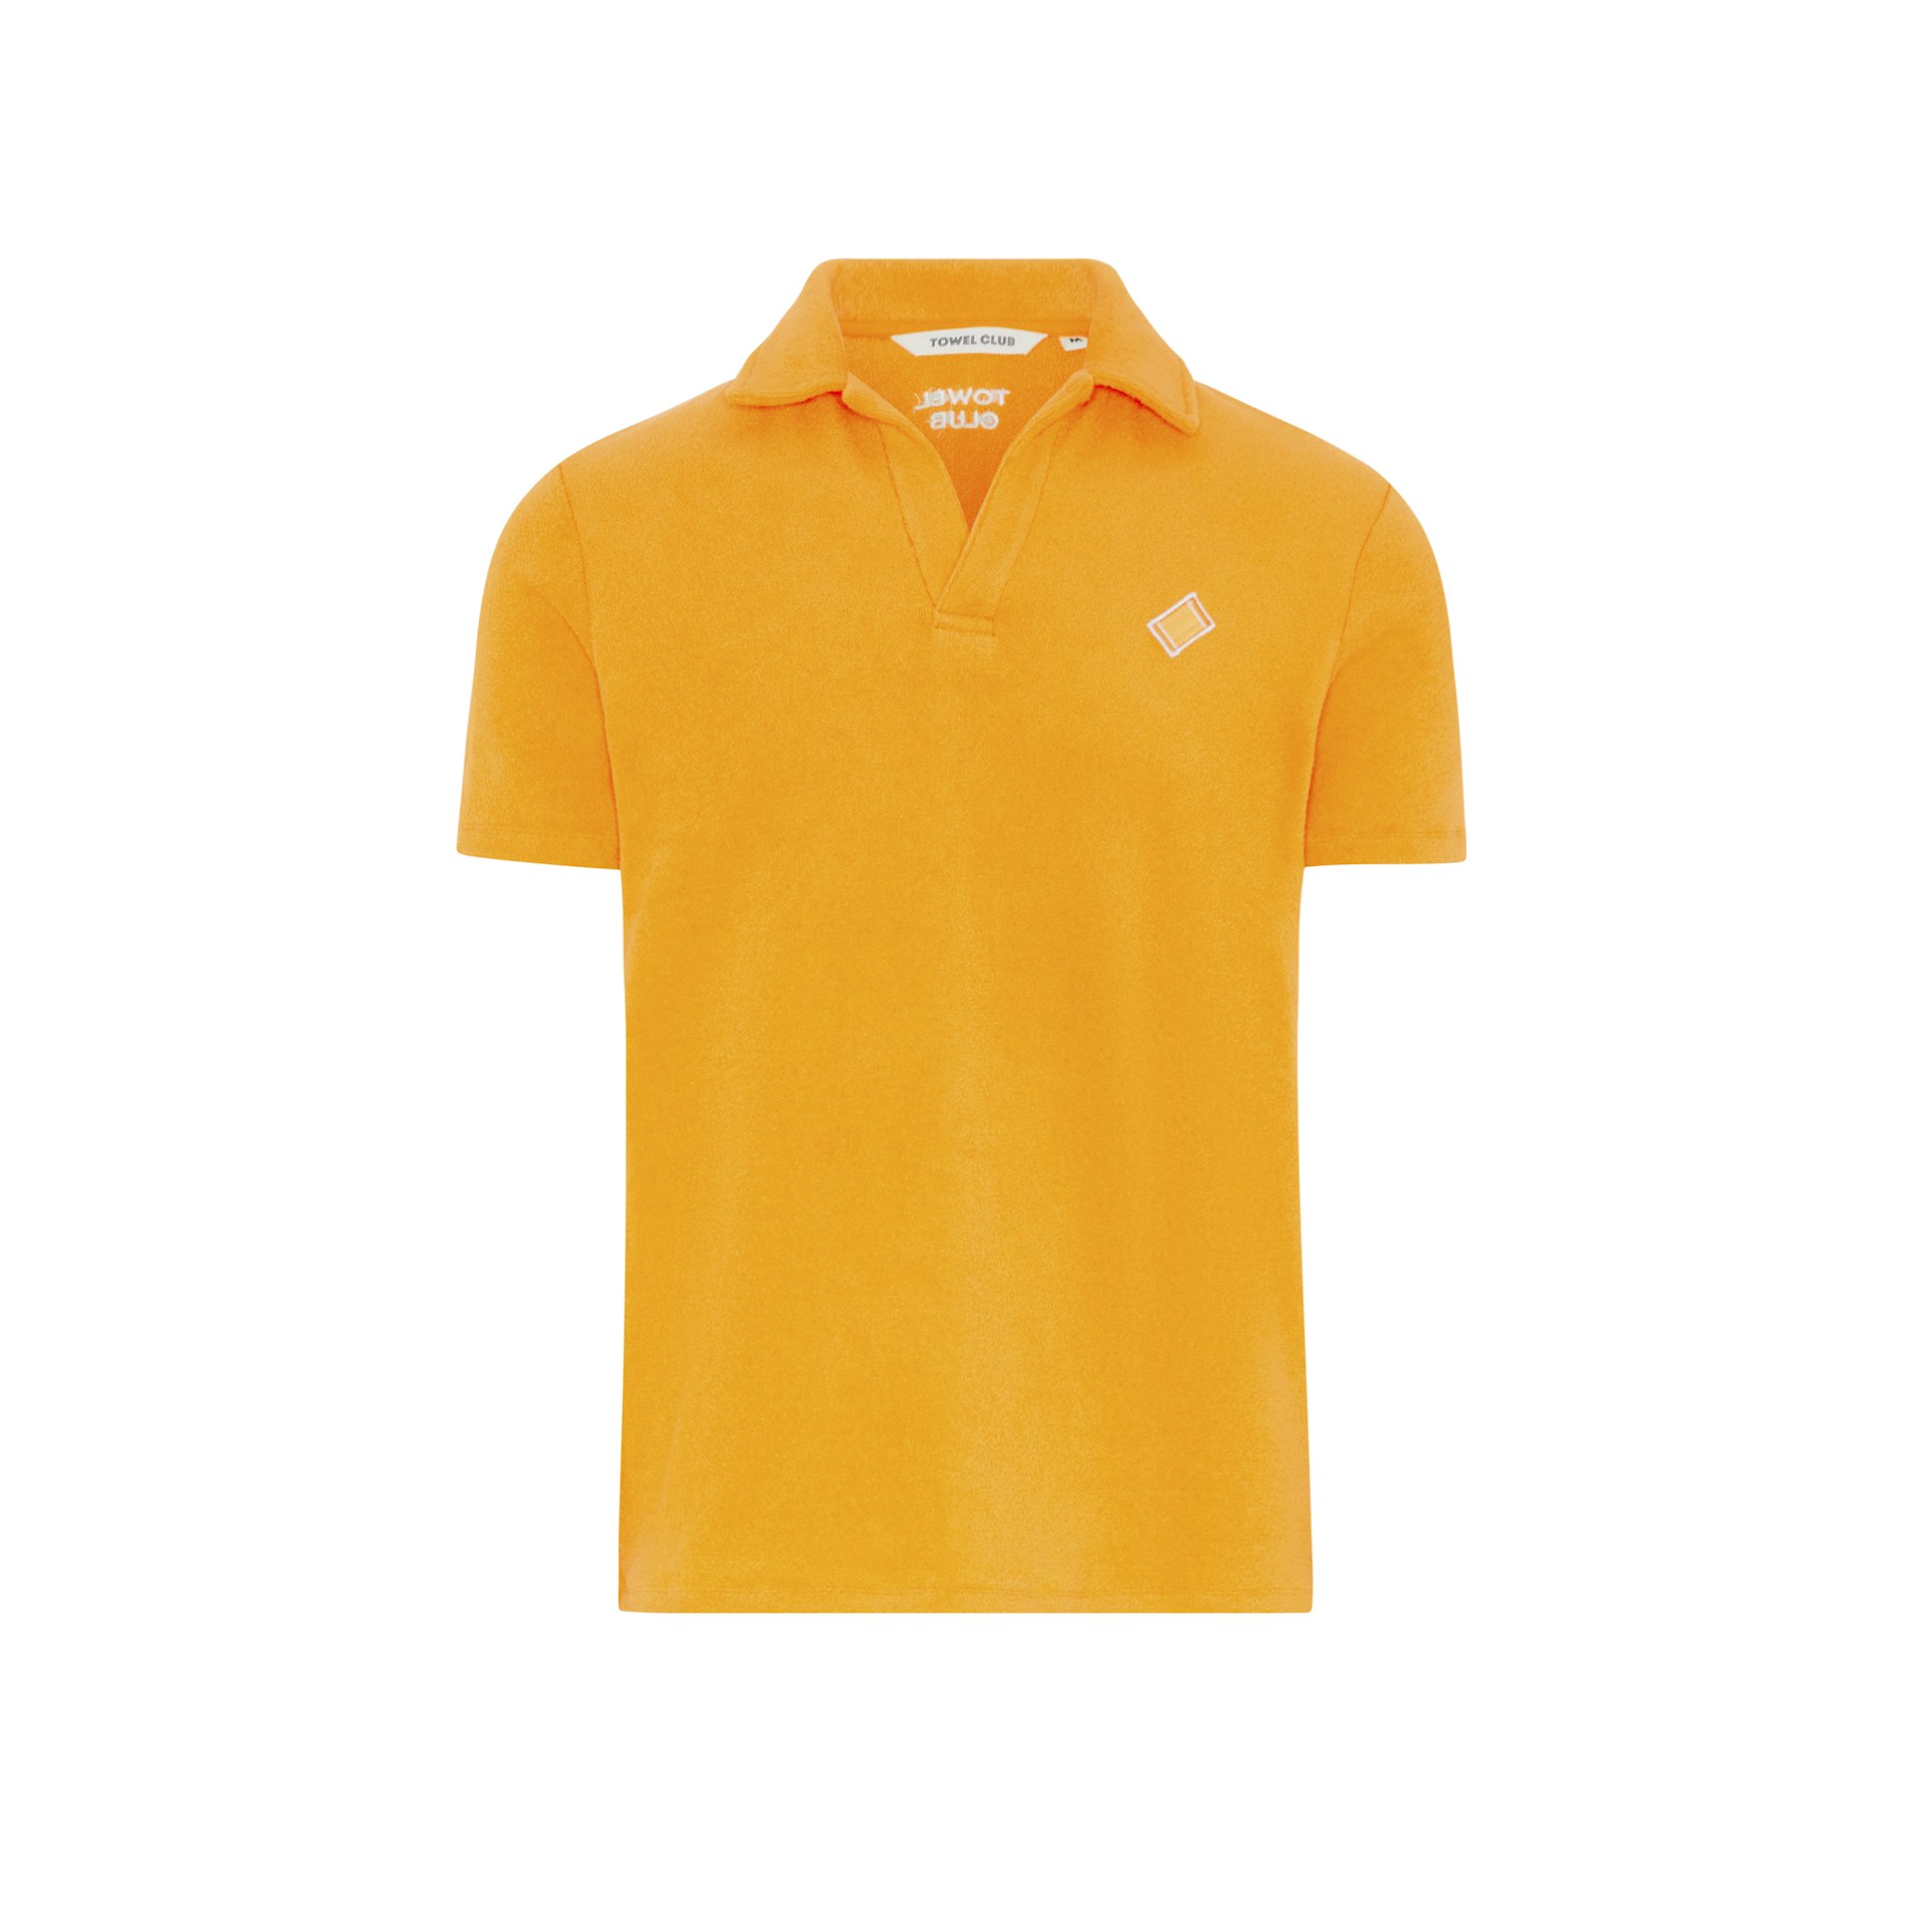 Towel Club Piquet Shirt Orange